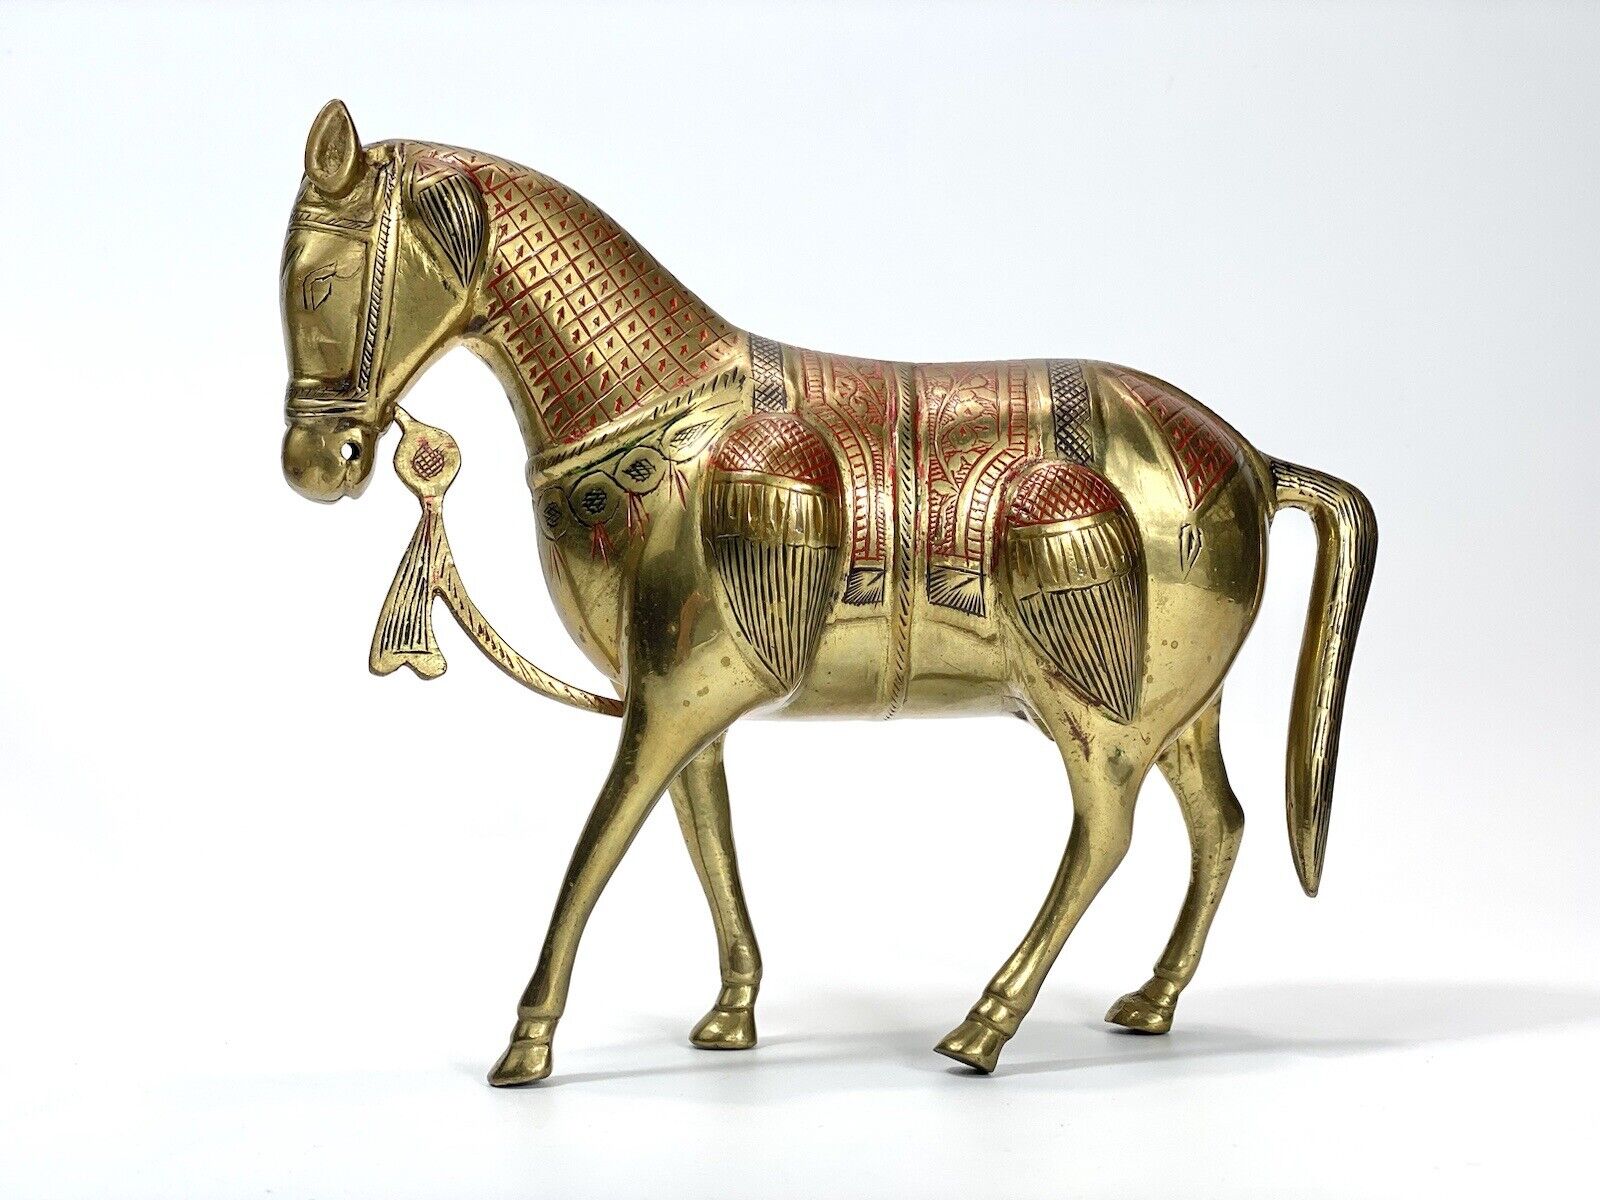 Beautiful Vintage handmade solid Brass Horse Statue art sculpture figurine